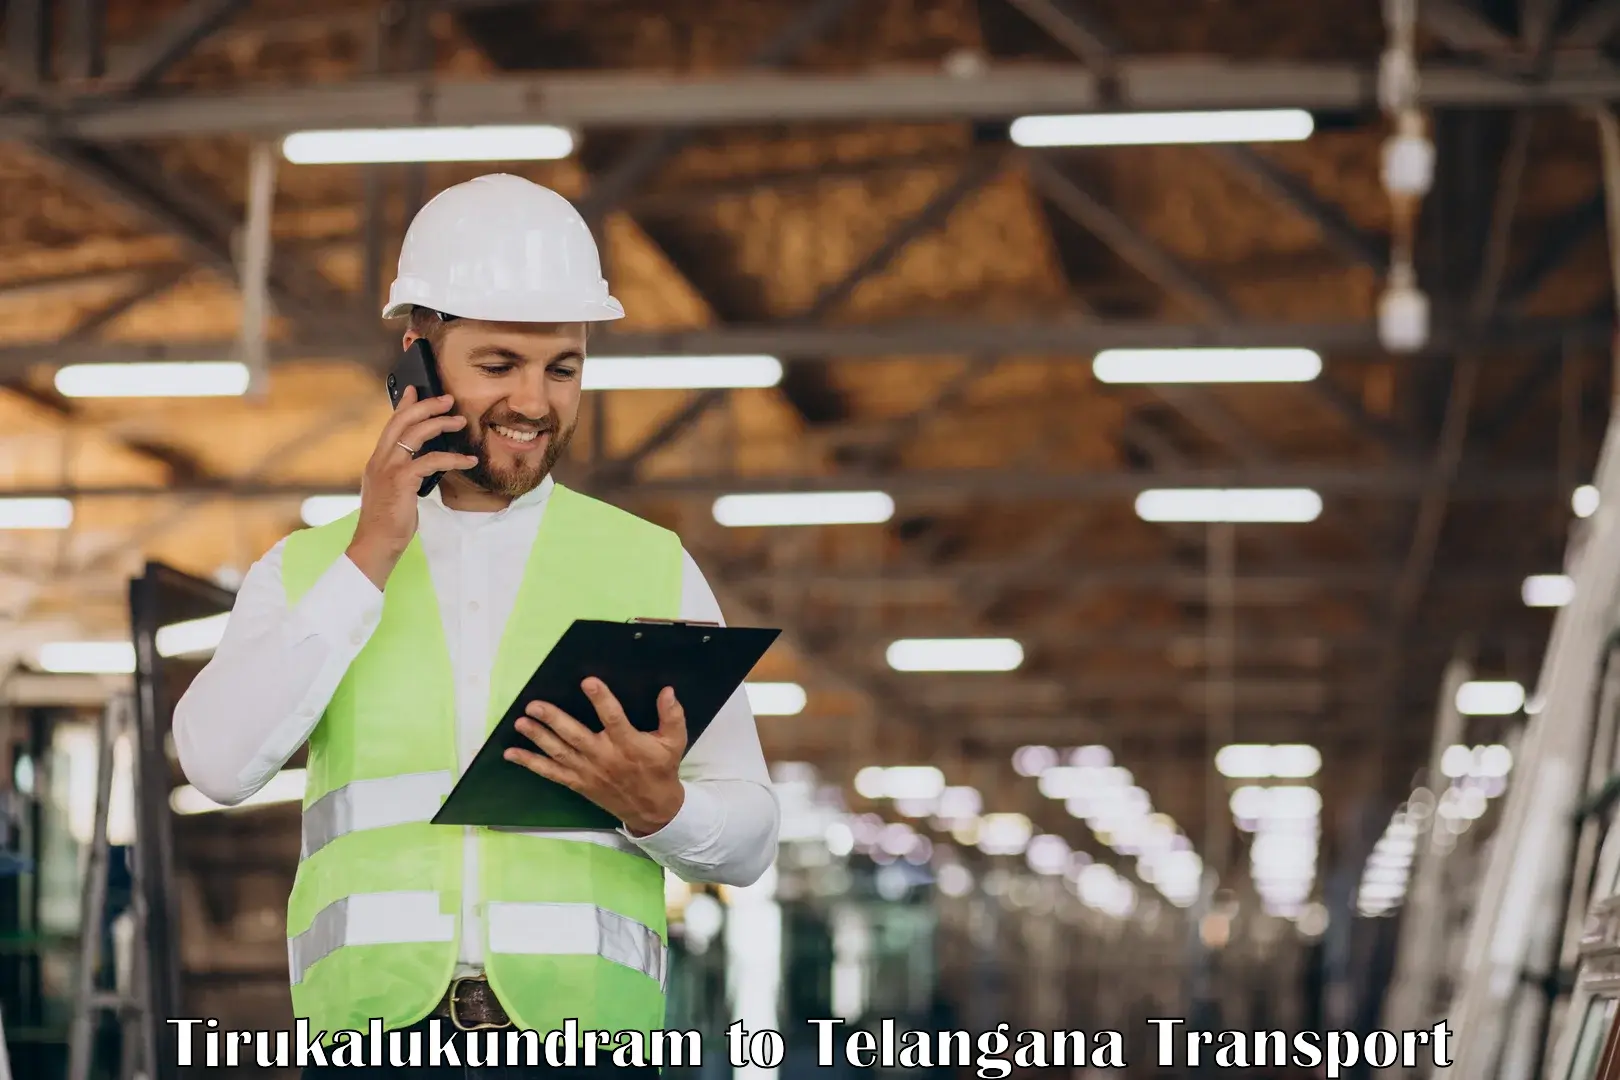 Truck transport companies in India Tirukalukundram to Yellareddy